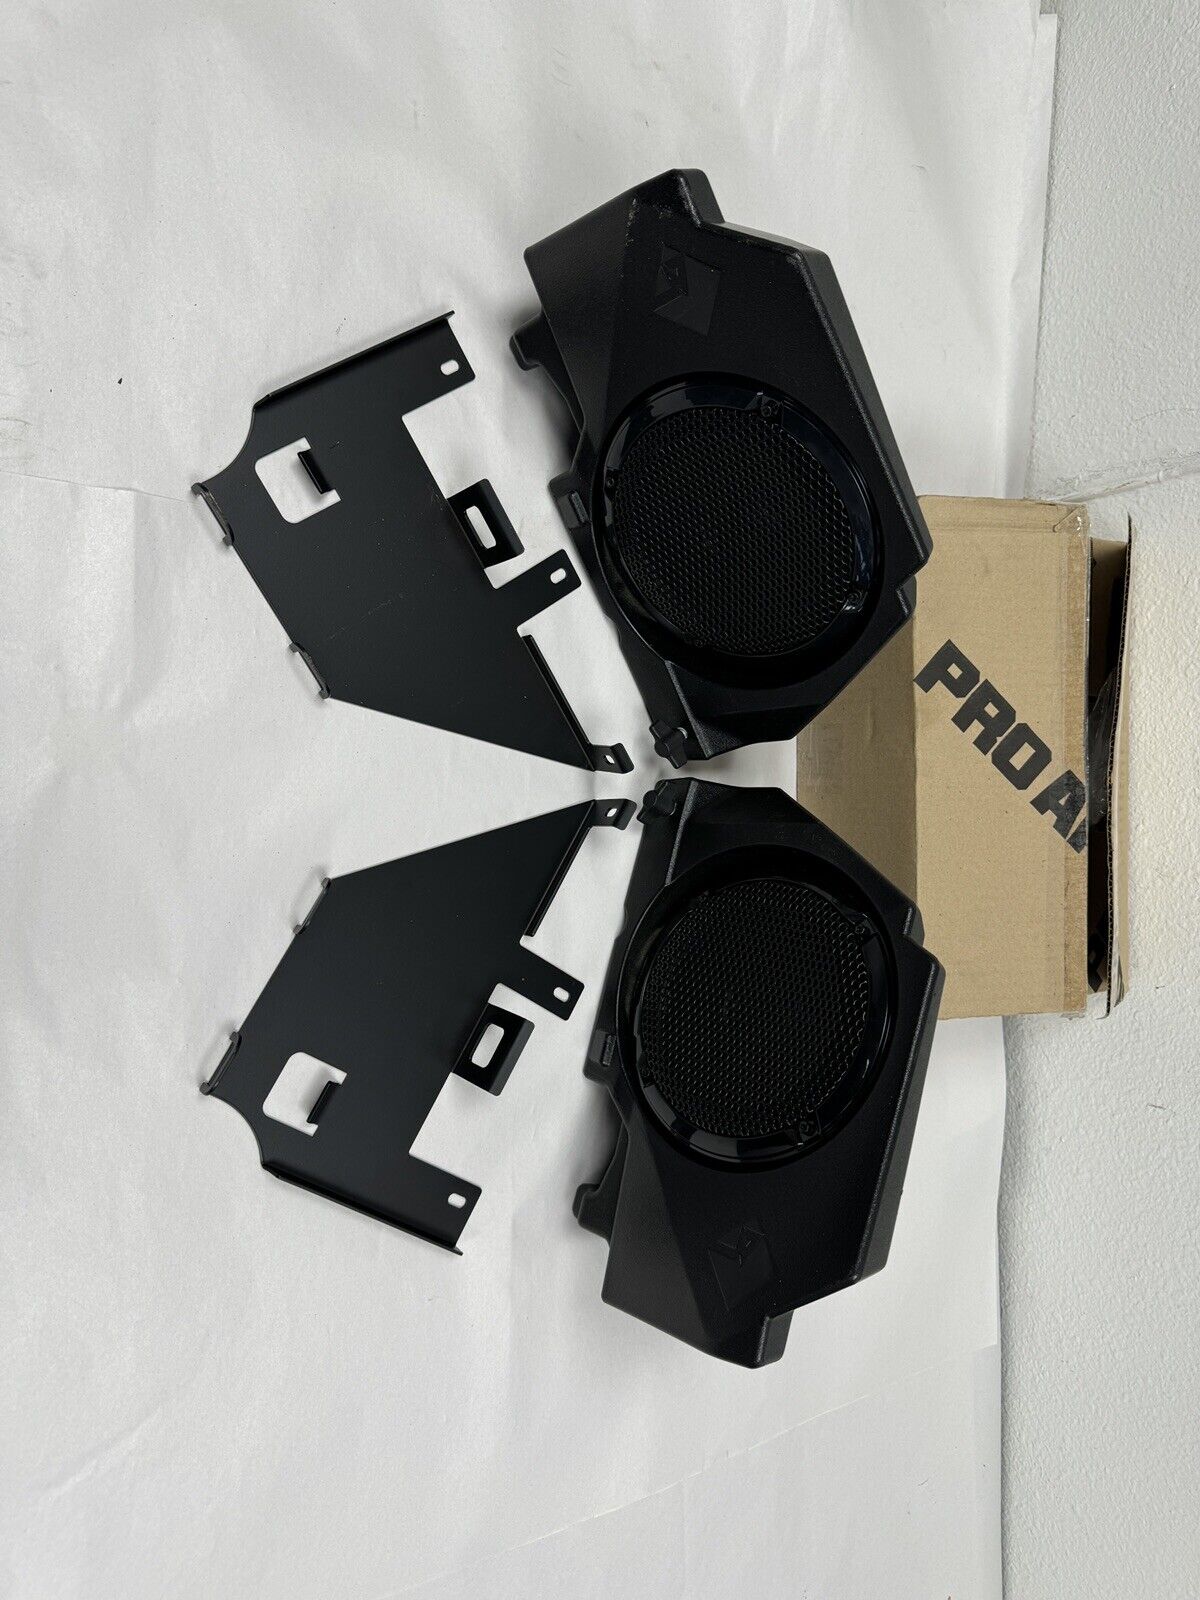 2-Polaris RZR Pro XP/PRO R Rockford Fosgate Rear Speakers #2414848/2414849